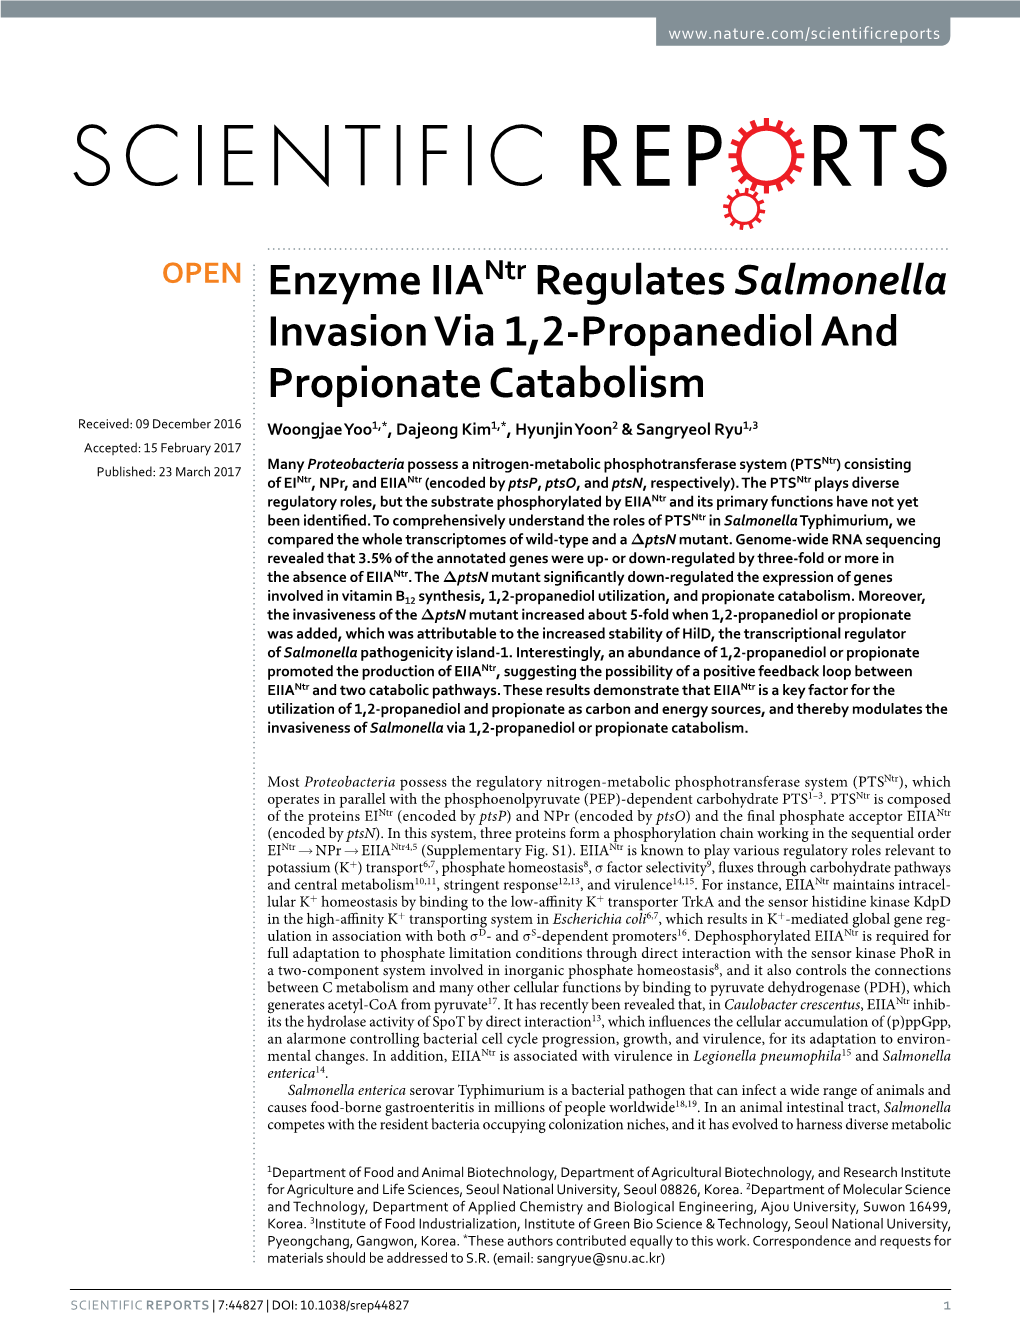 Enzyme Iiantr Regulates Salmonella Invasion Via 1,2-Propanediol And